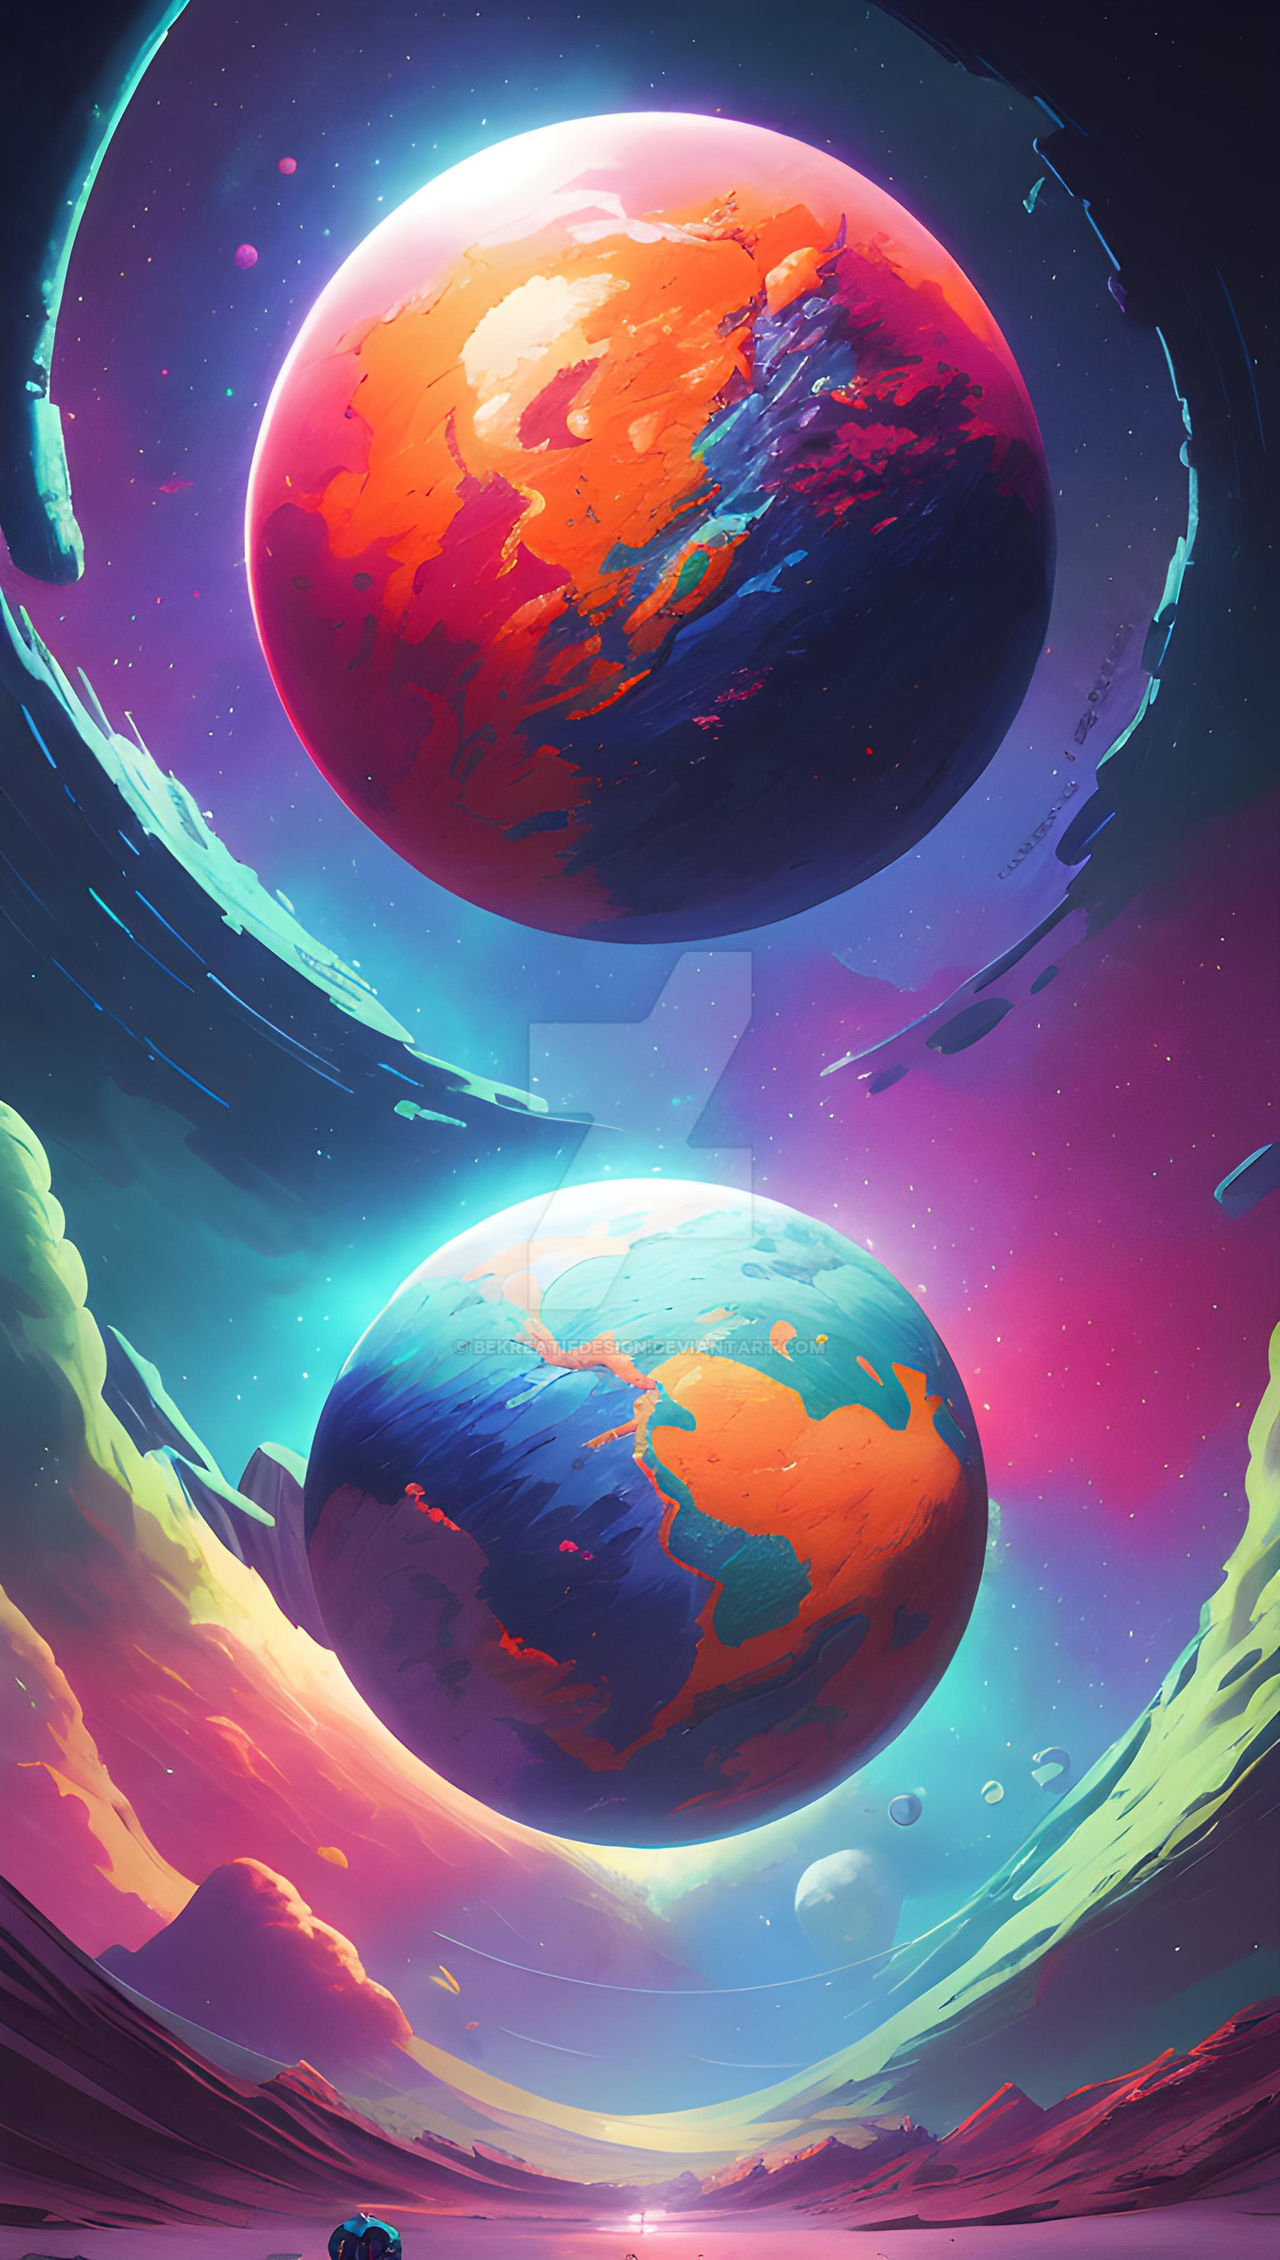 Wallpaper iphone cyberpunk planet earth by bekreatifdesign on DeviantArt